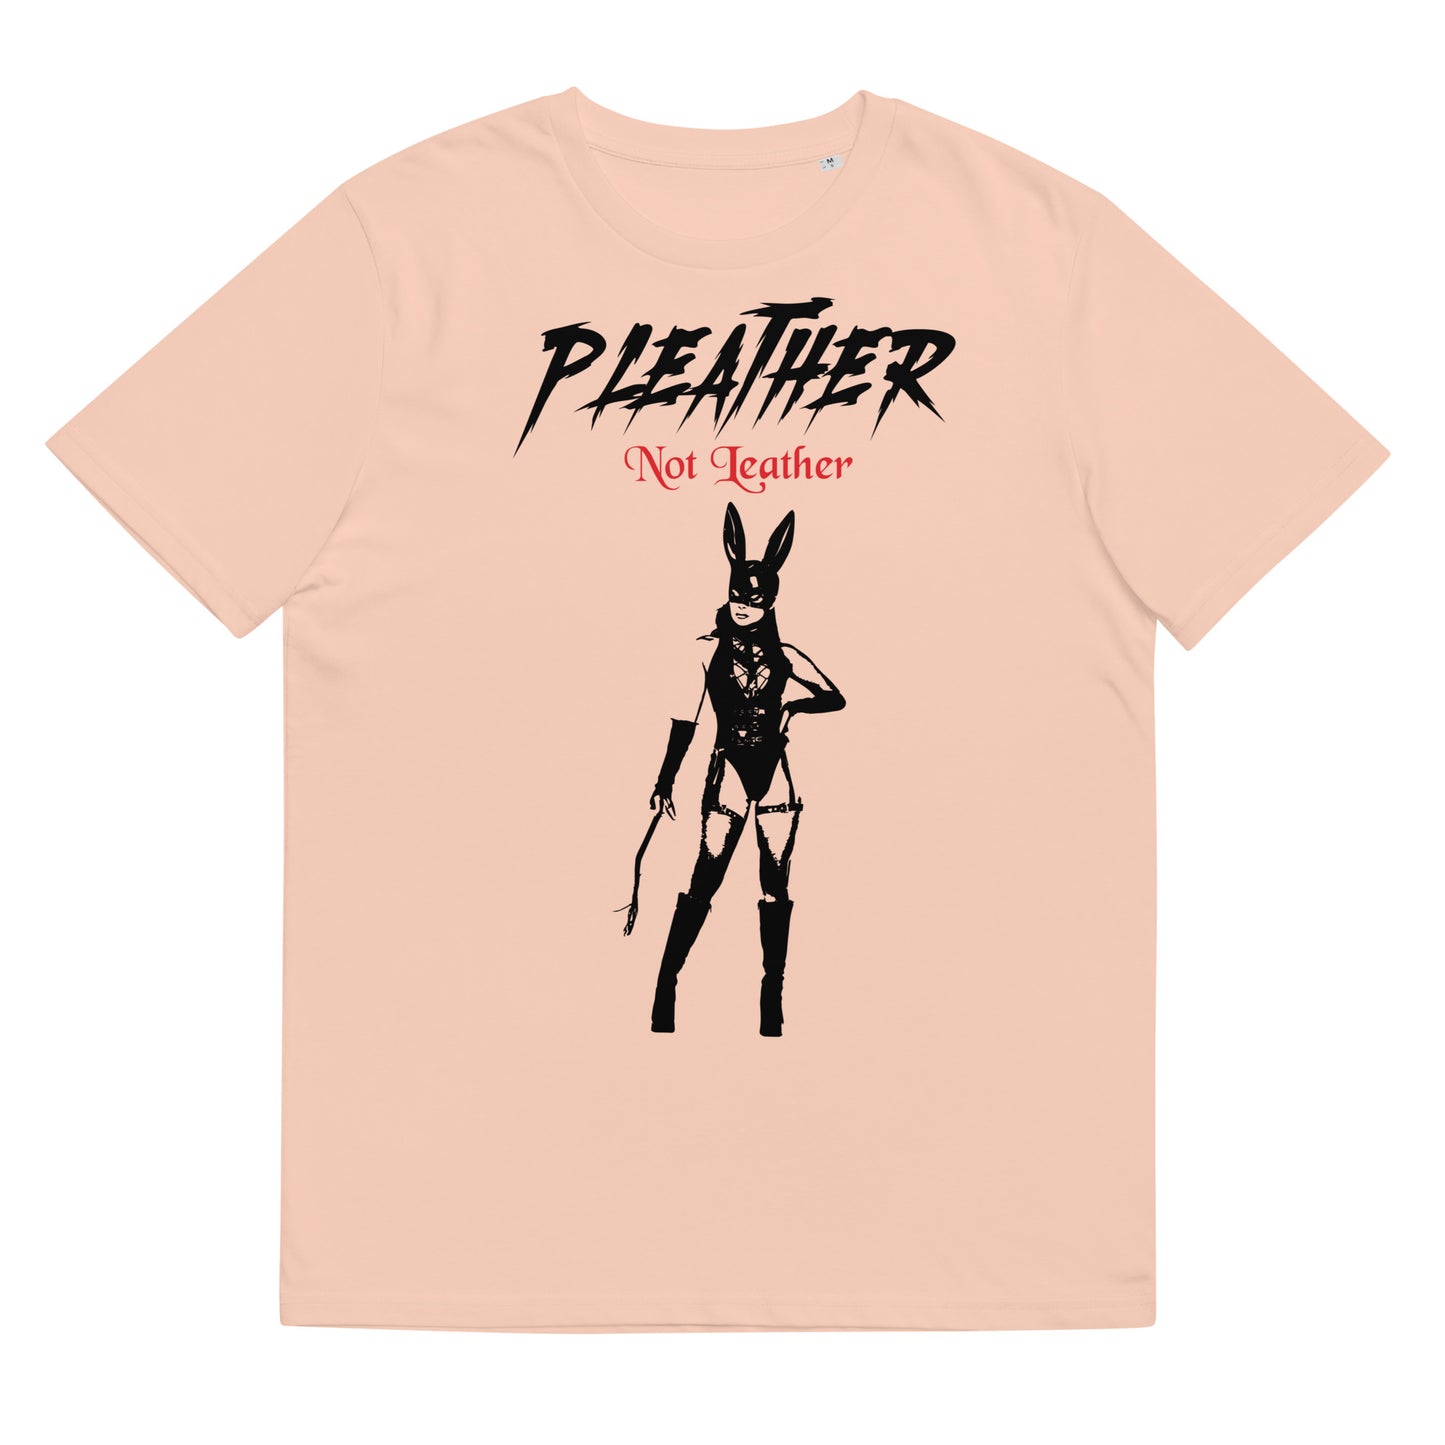 Pleather Not Leather - Unisex organic cotton t-shirt